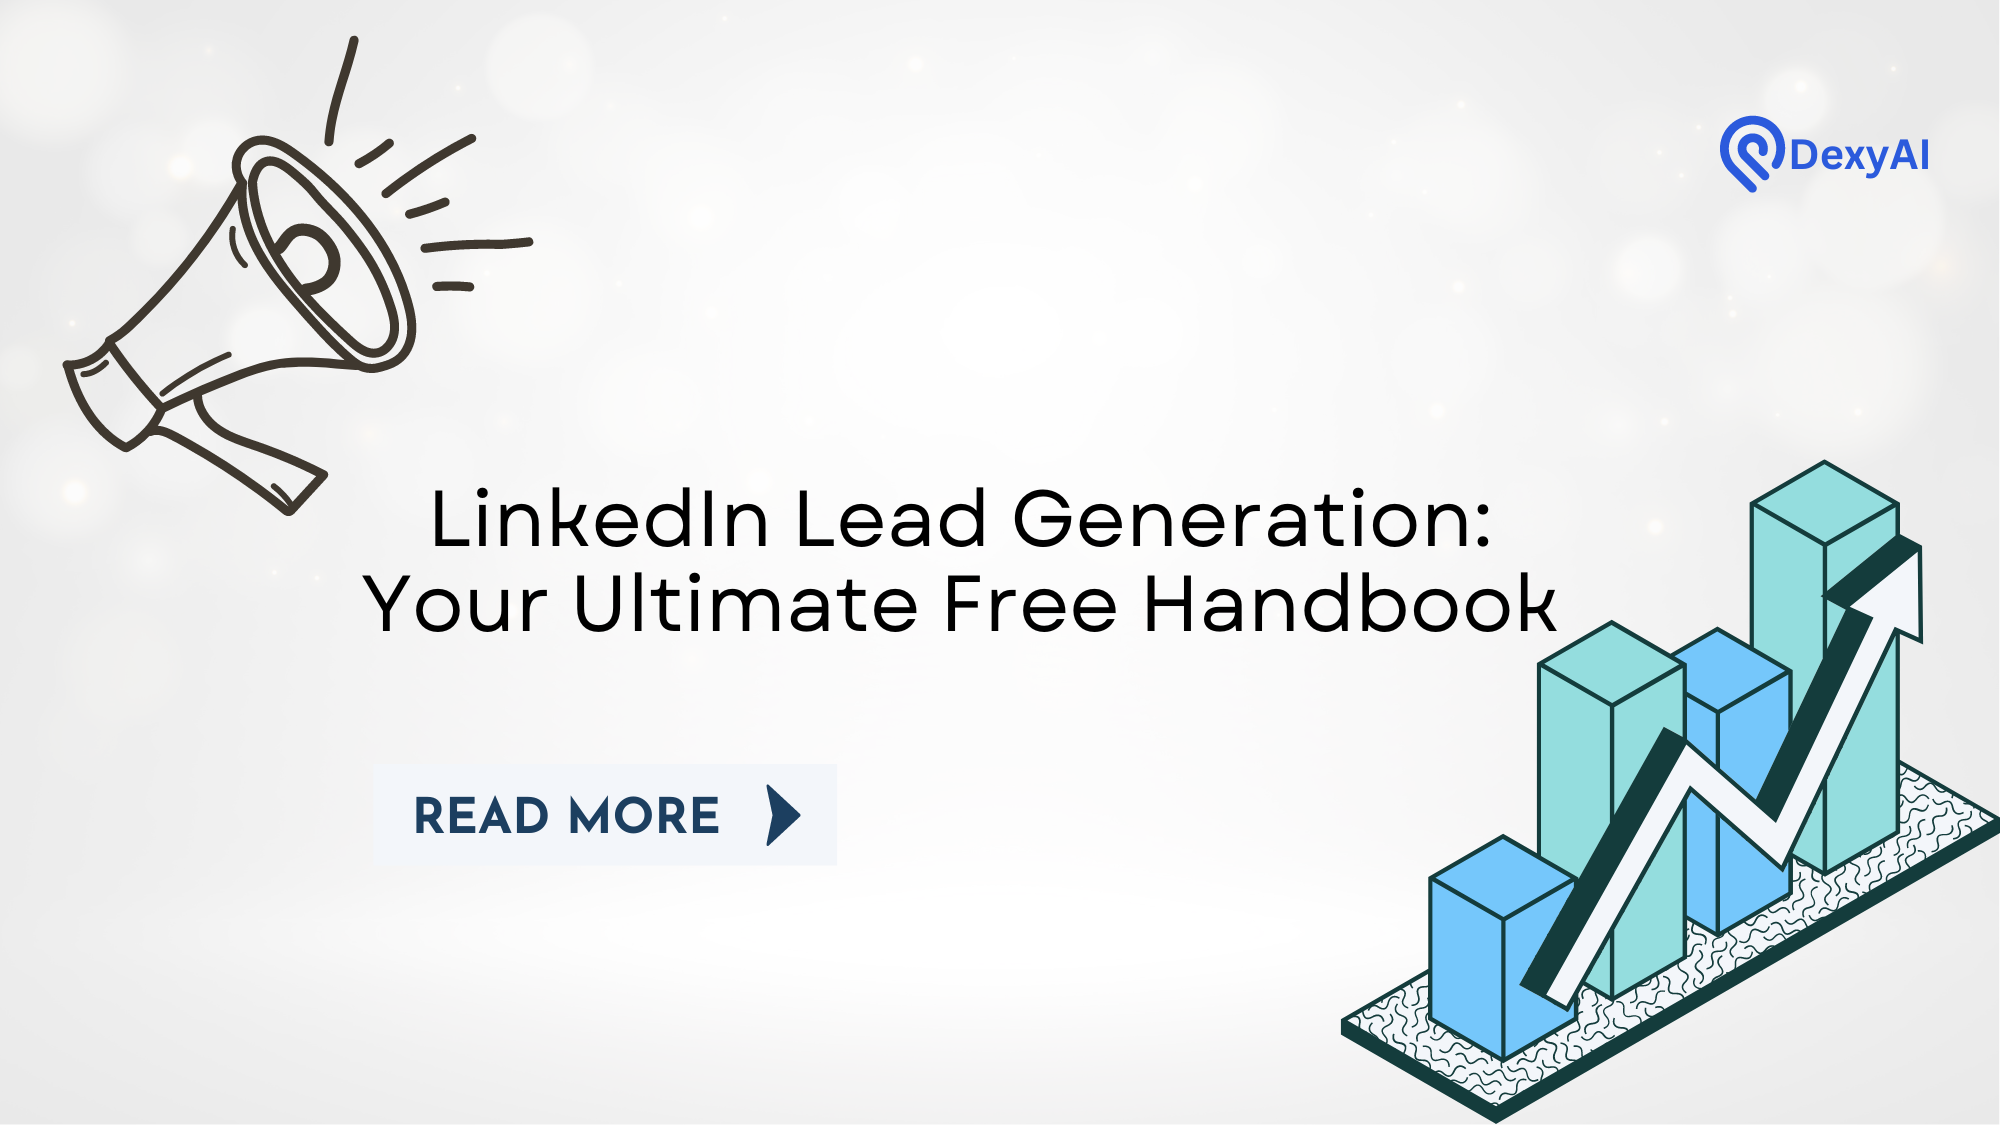 LinkedIn Lead Generation: Your Ultimate Free Handbook